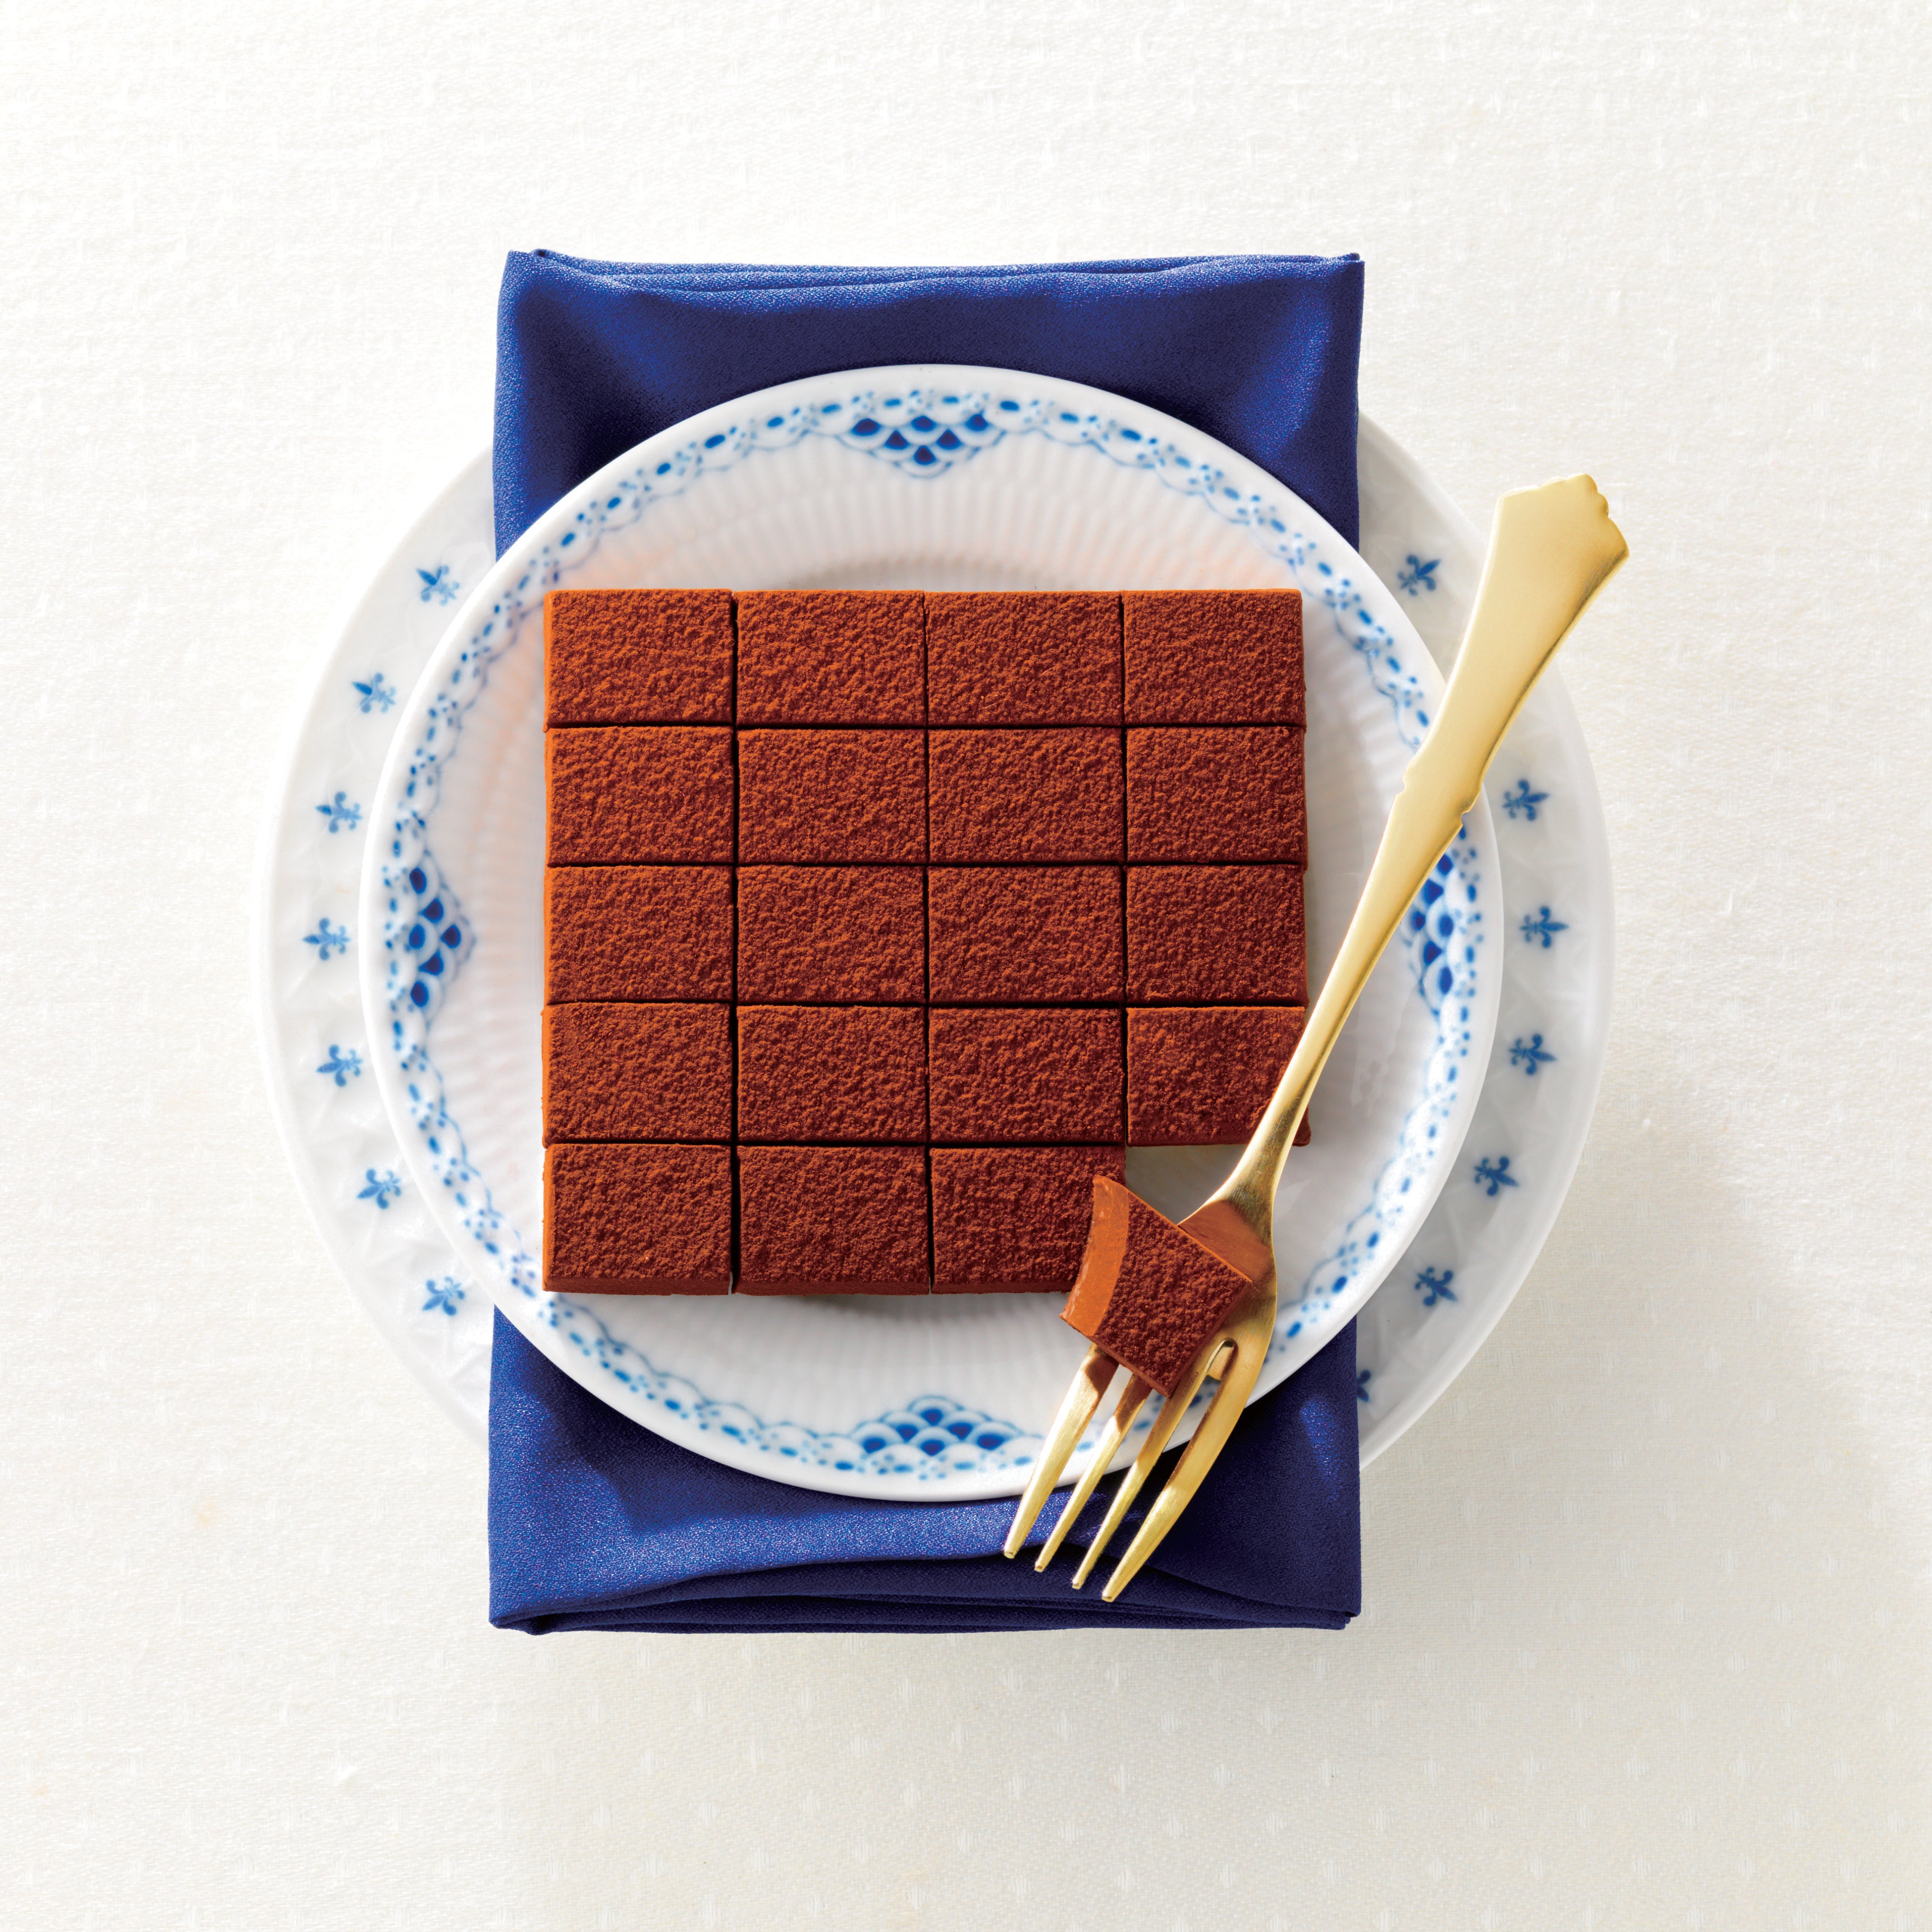 Image shows ROYCE' Nama Chocolate blocks on plates.